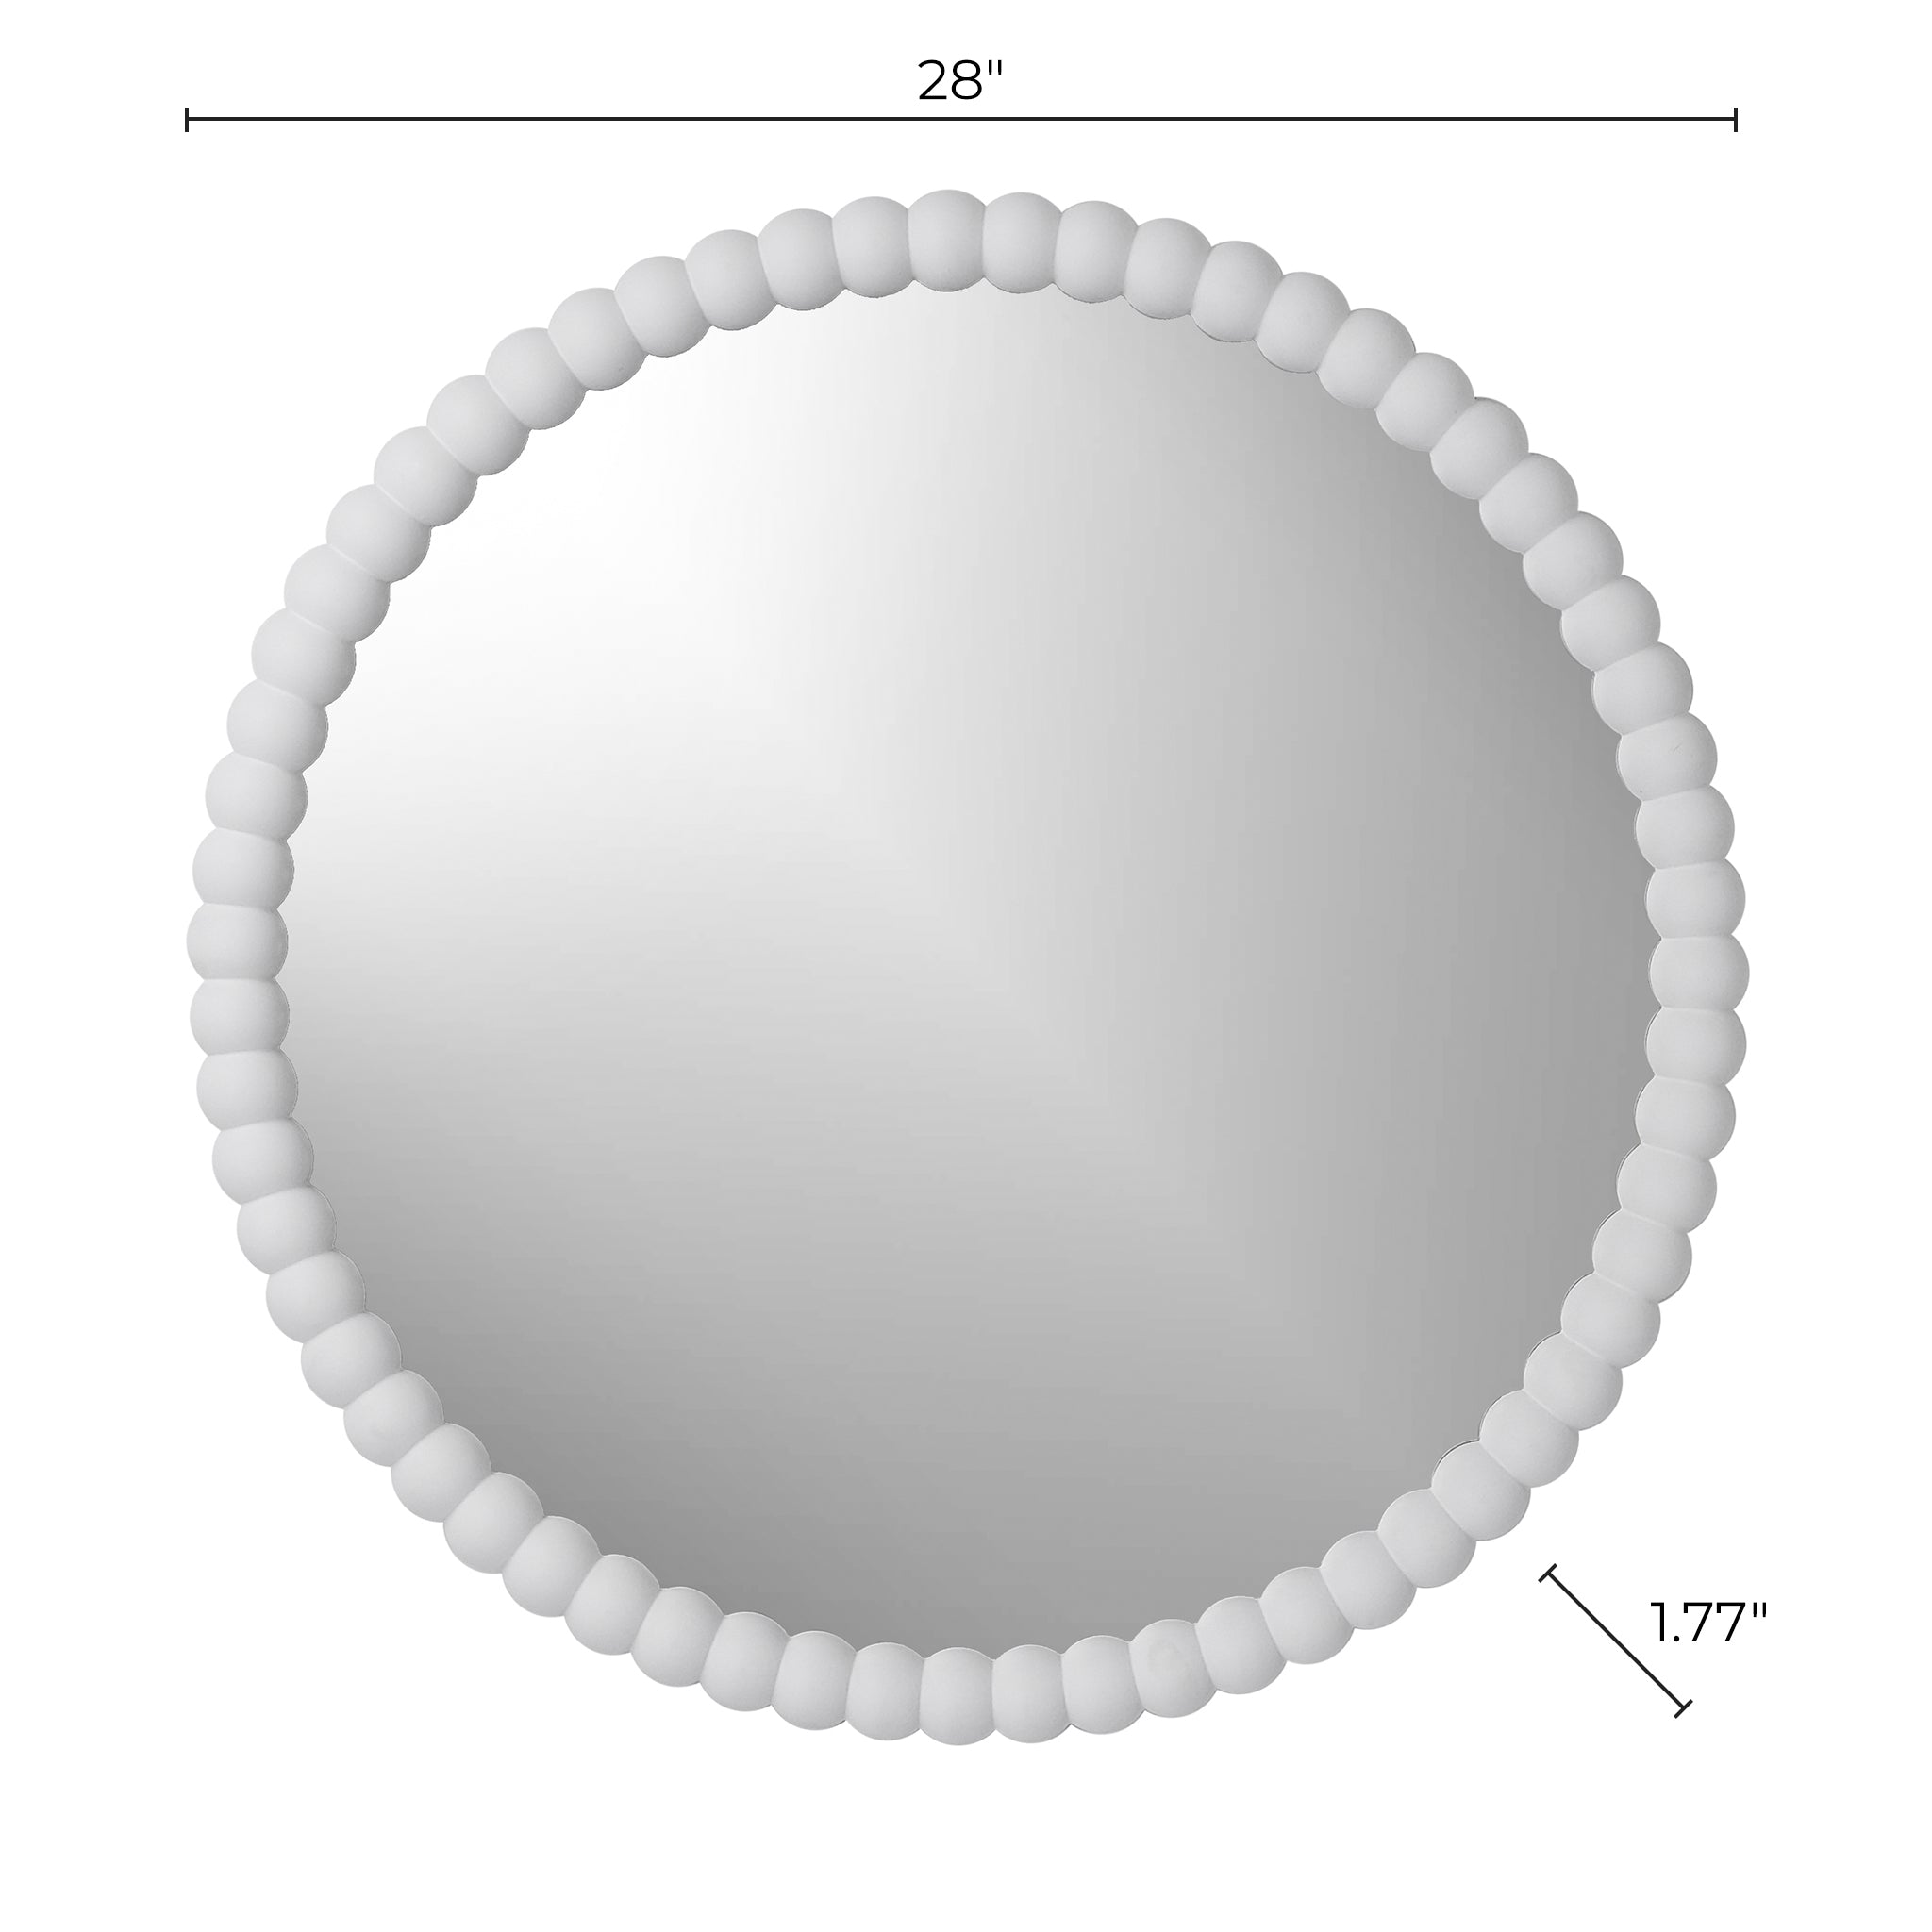 Round mirror dimensions